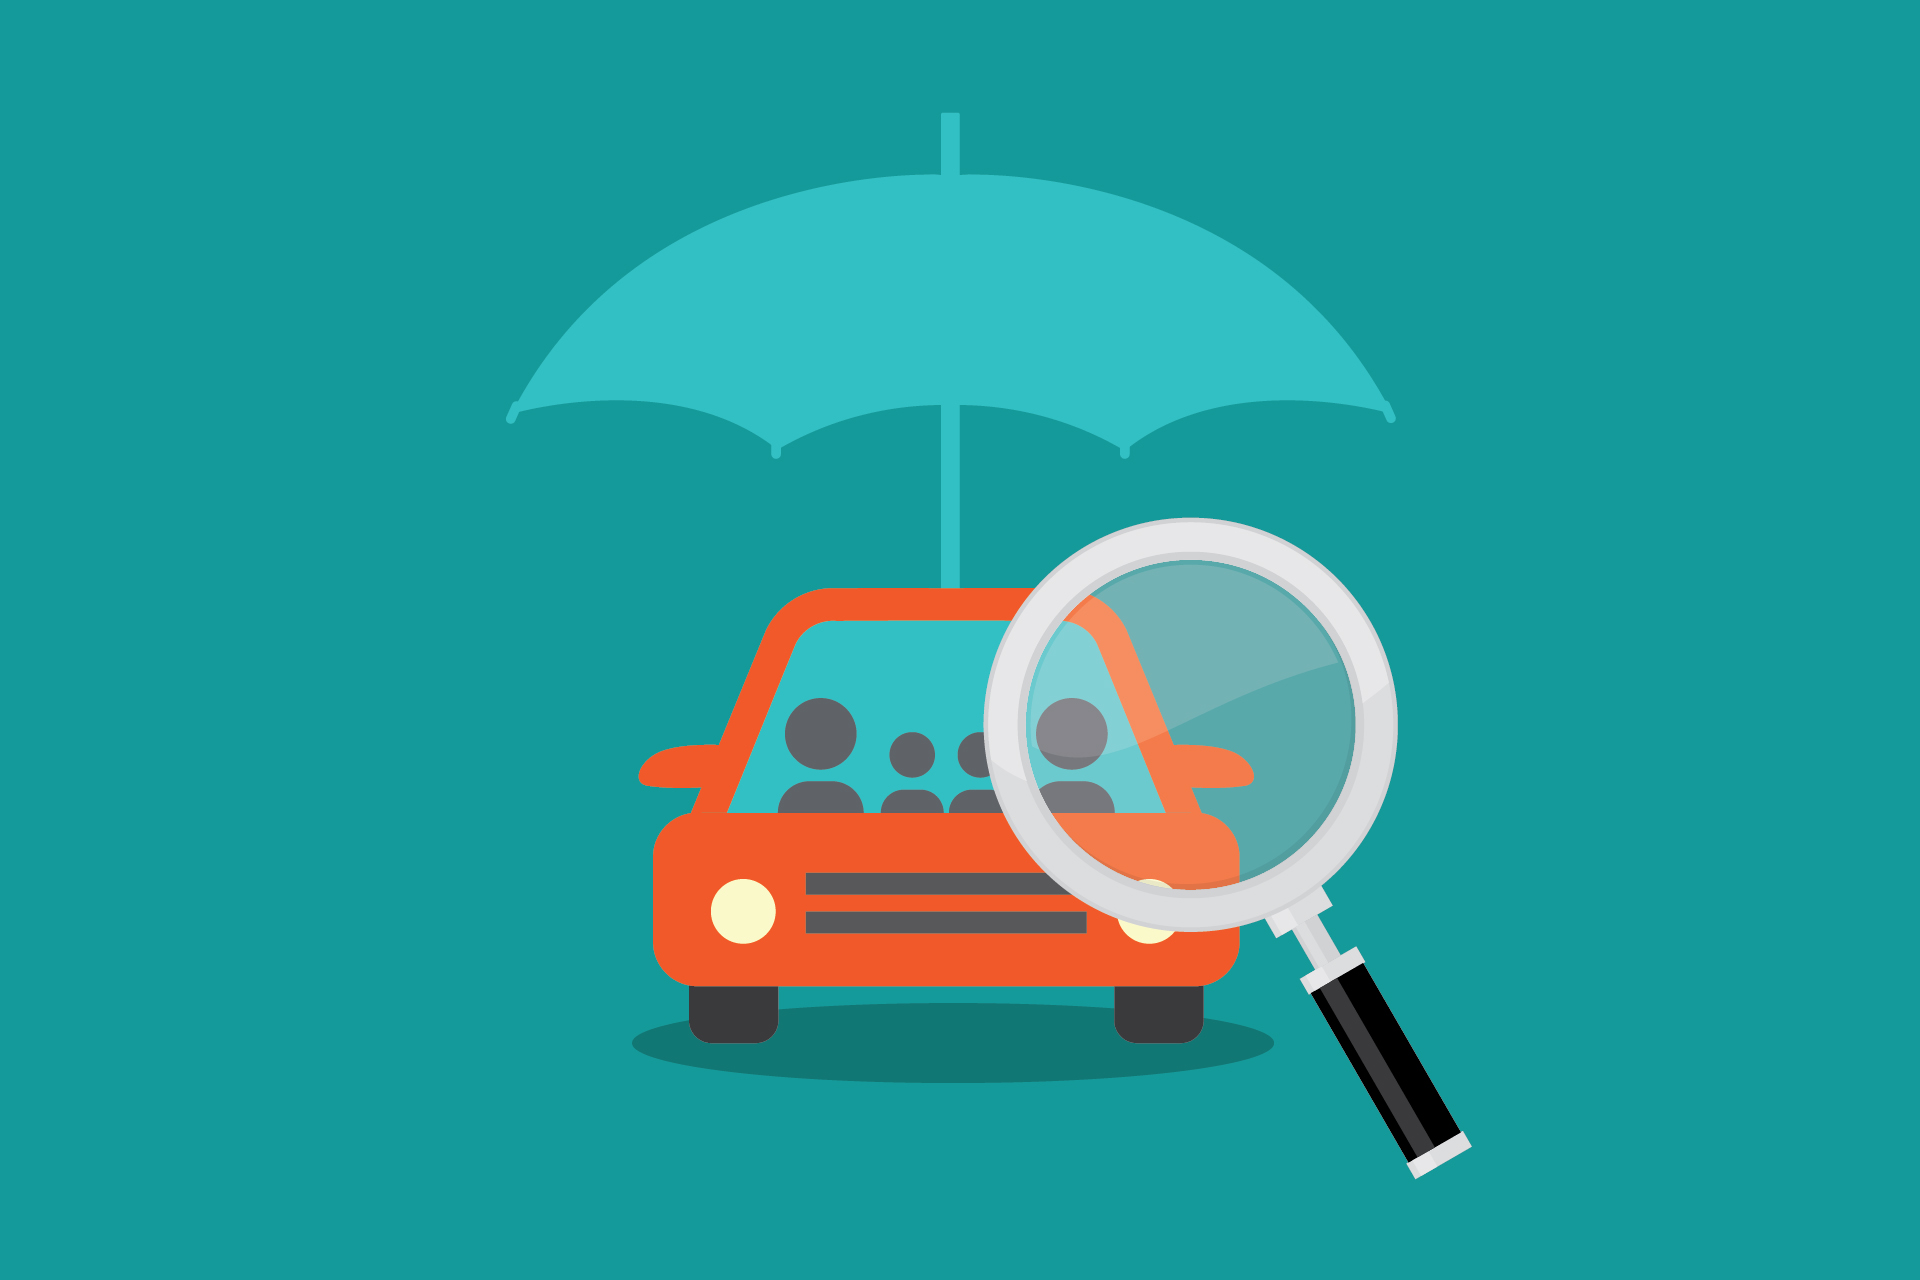 Find affordable car insurance free image download